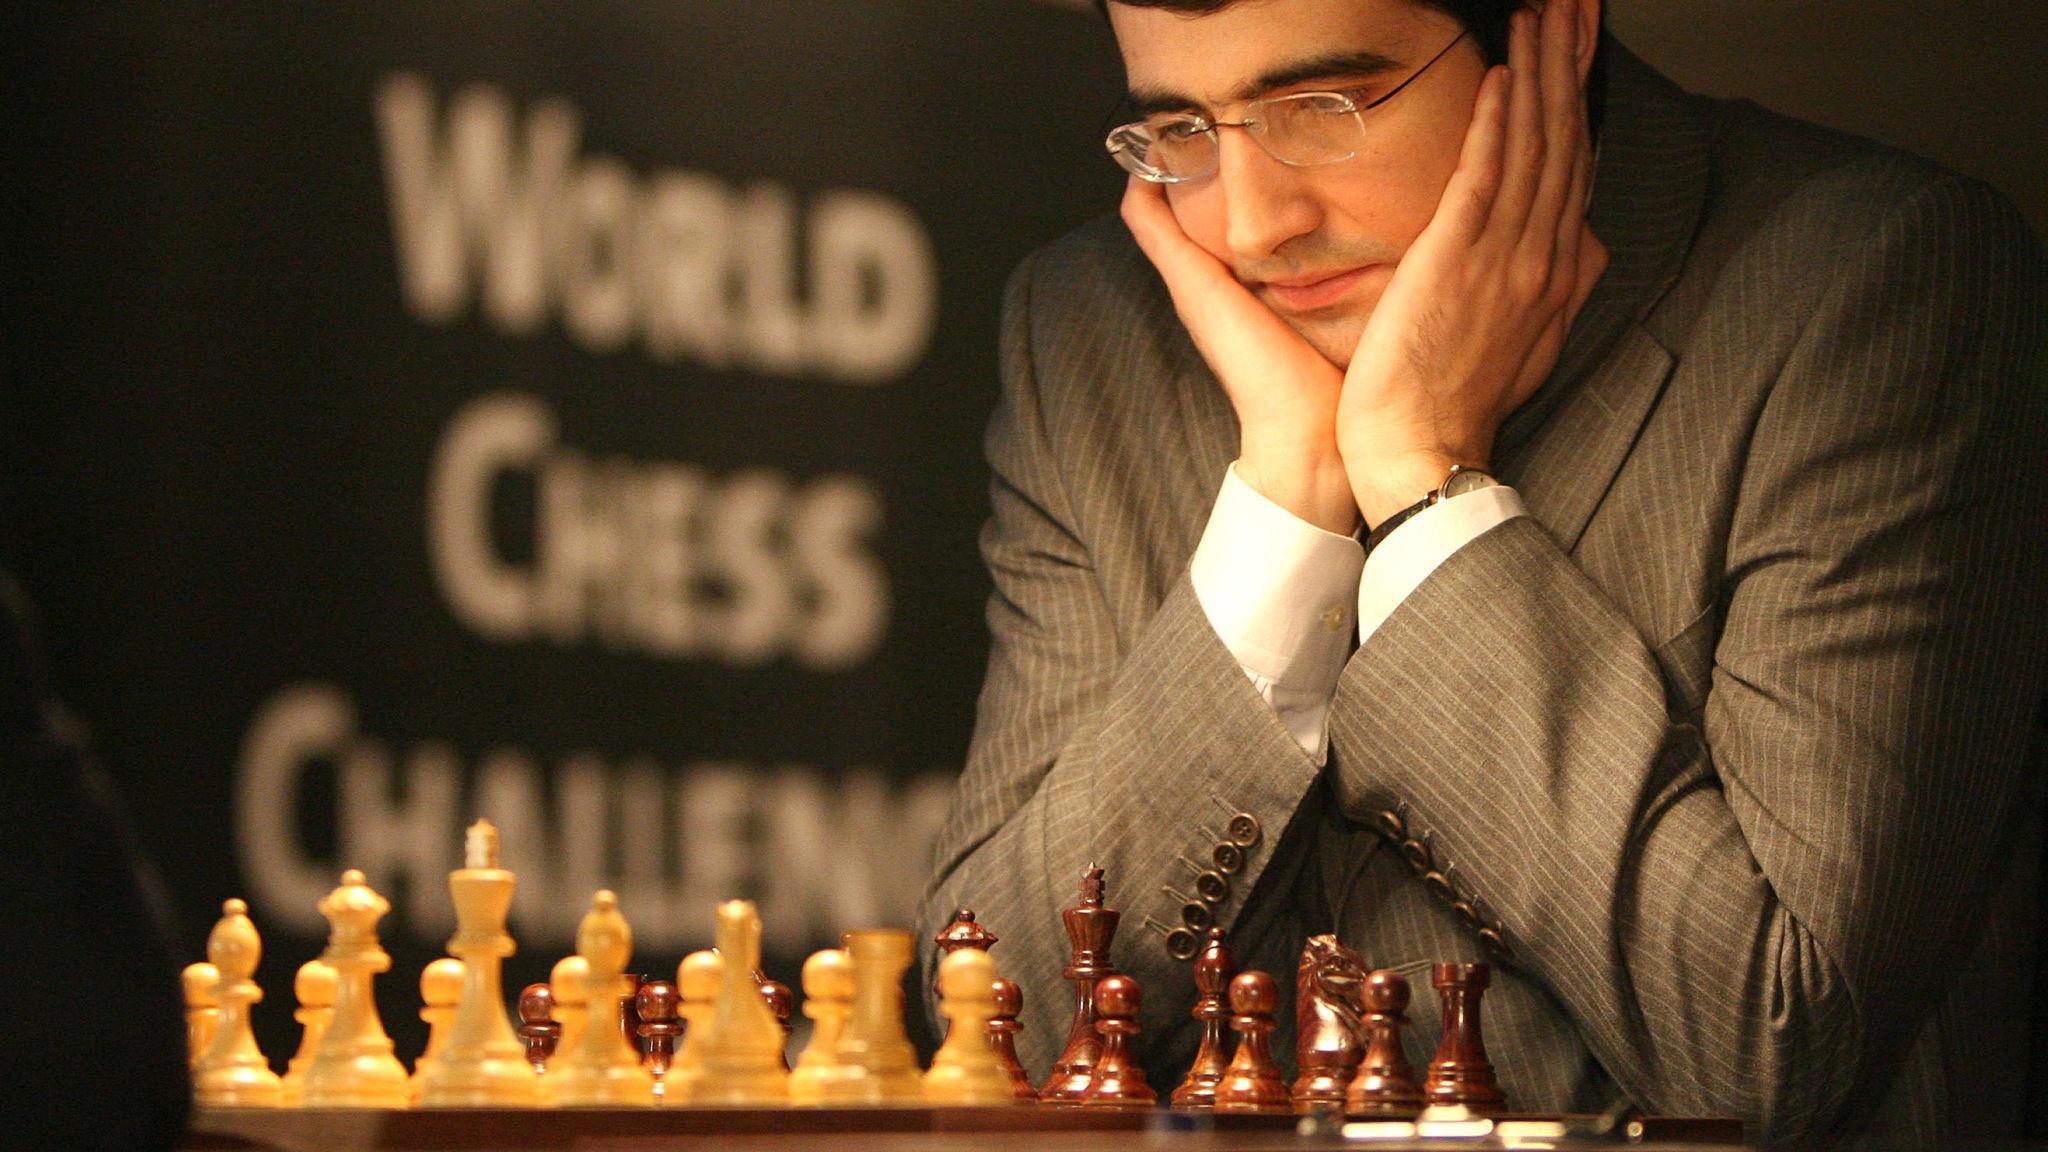 Episode 237- GM Vladimir Kramnik — The Perpetual Chess Podcast